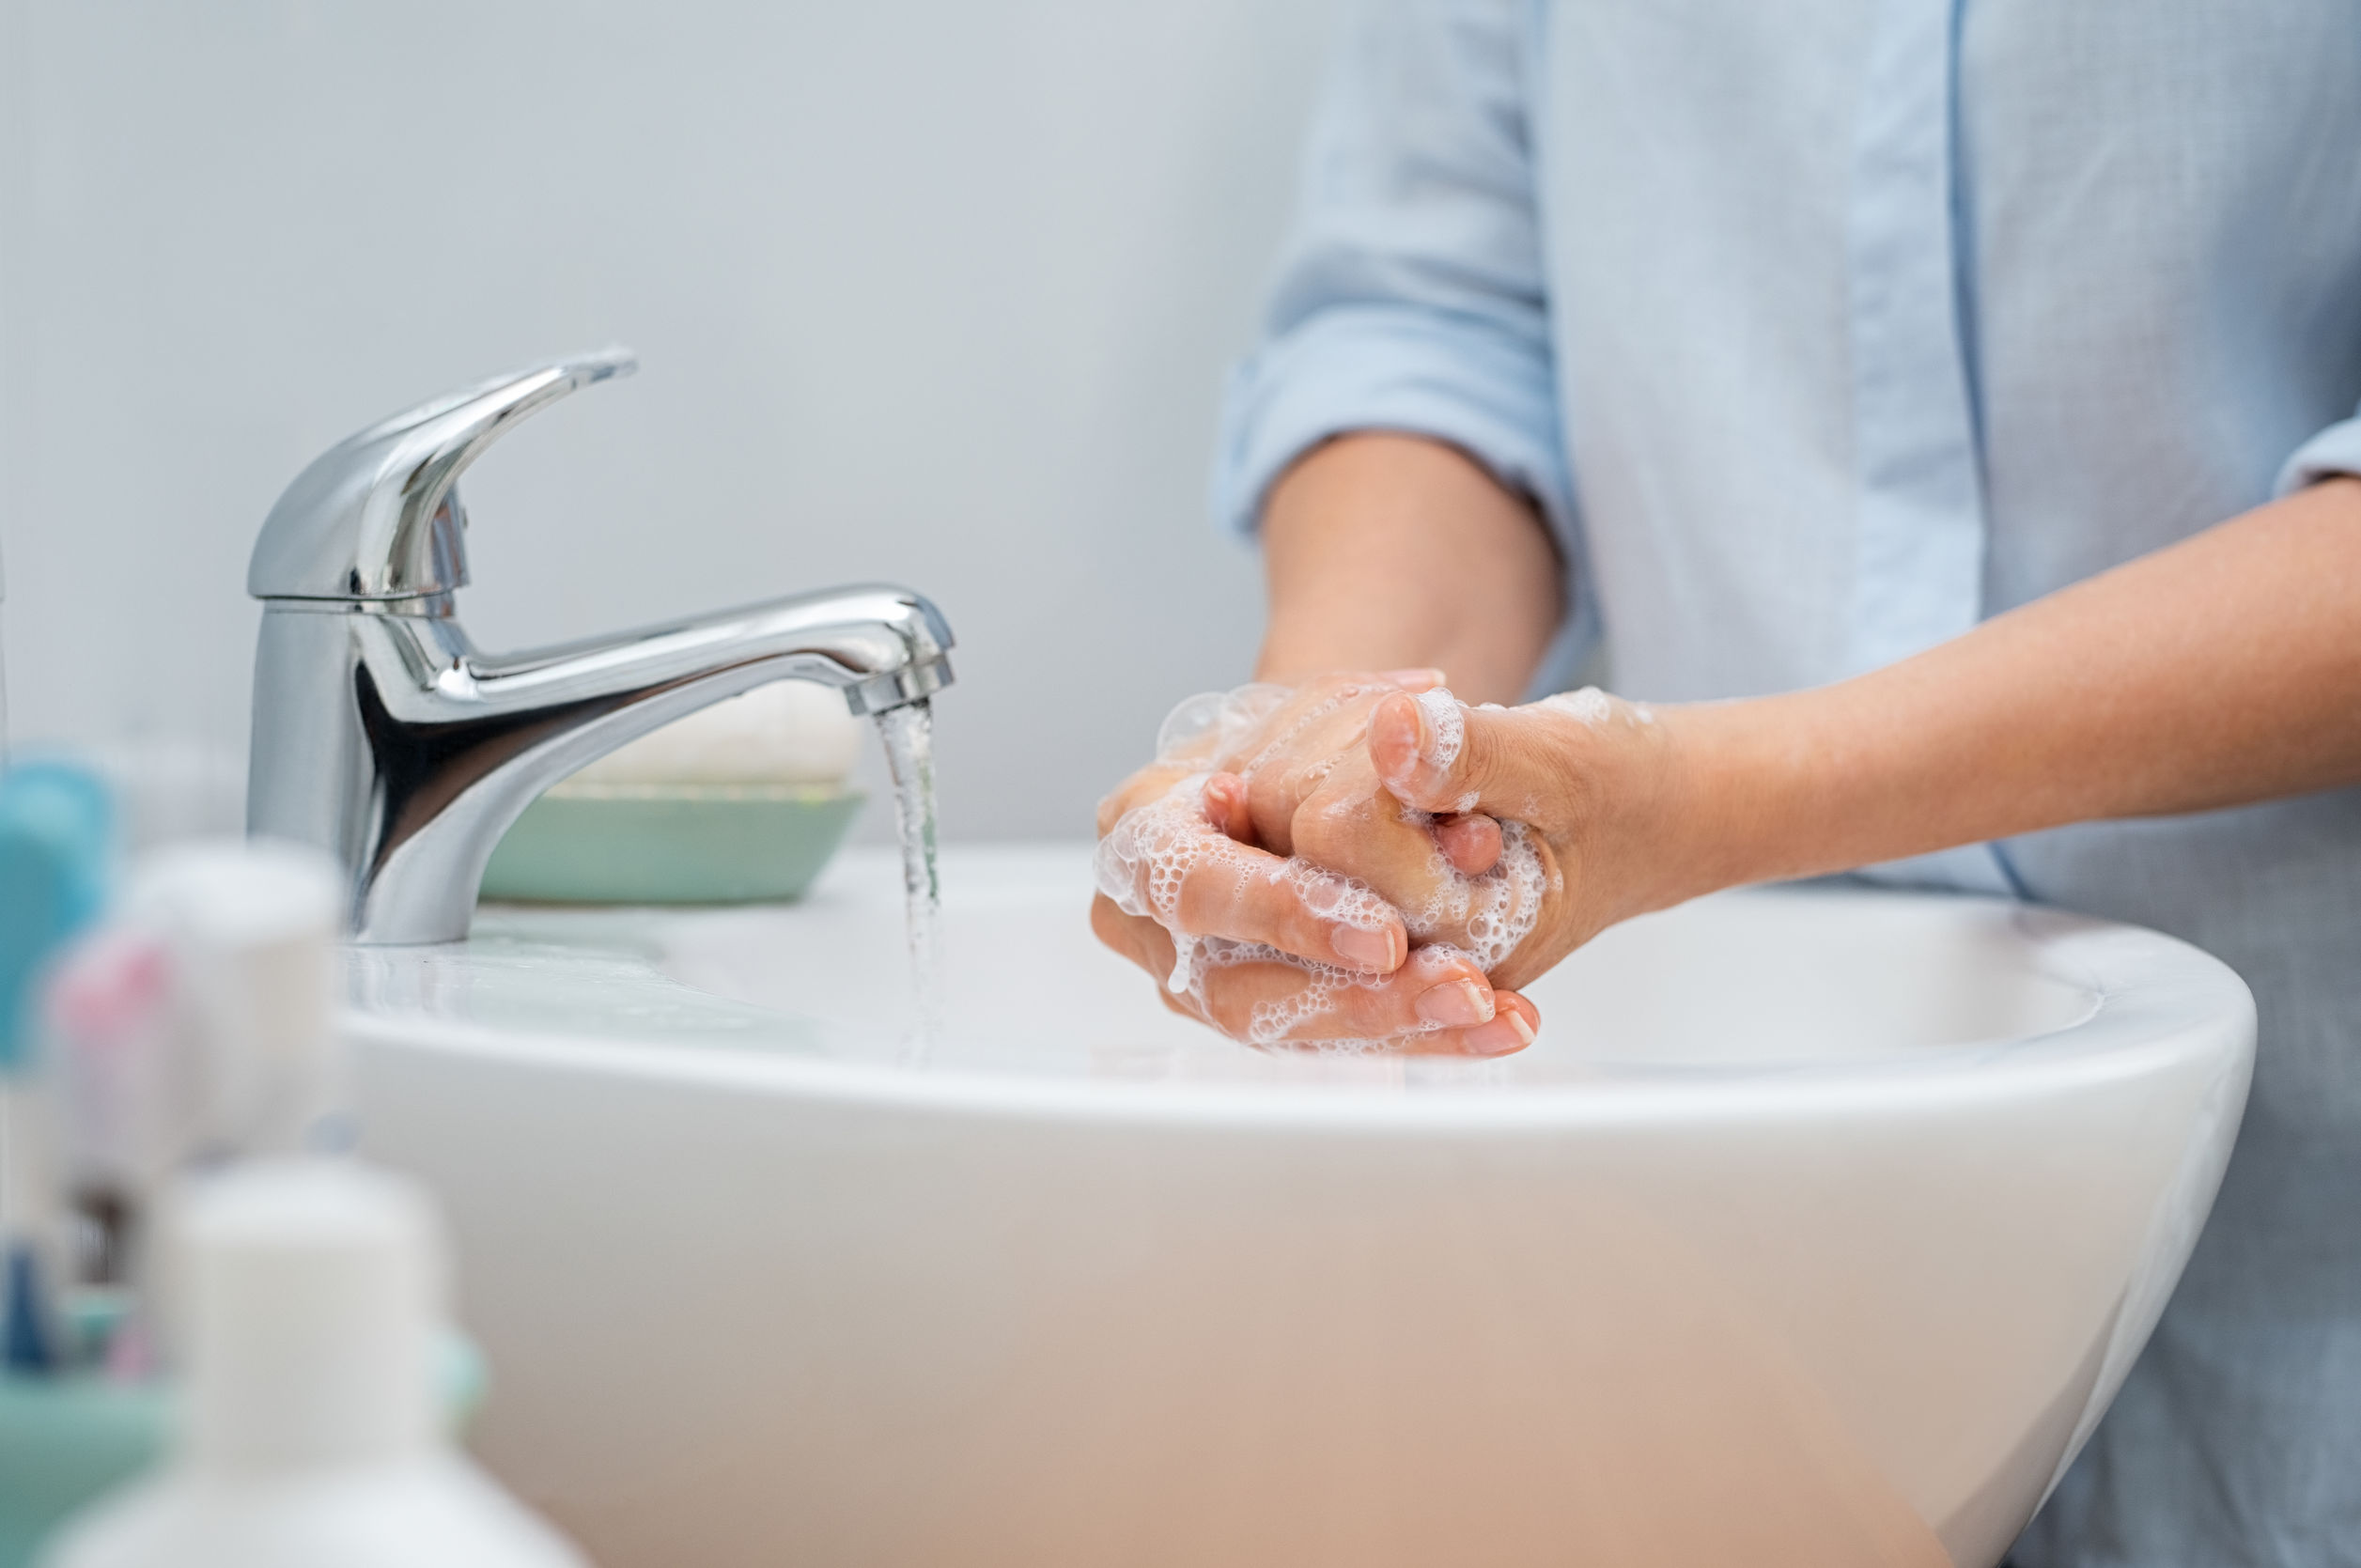 Tips for Proper Handwashing